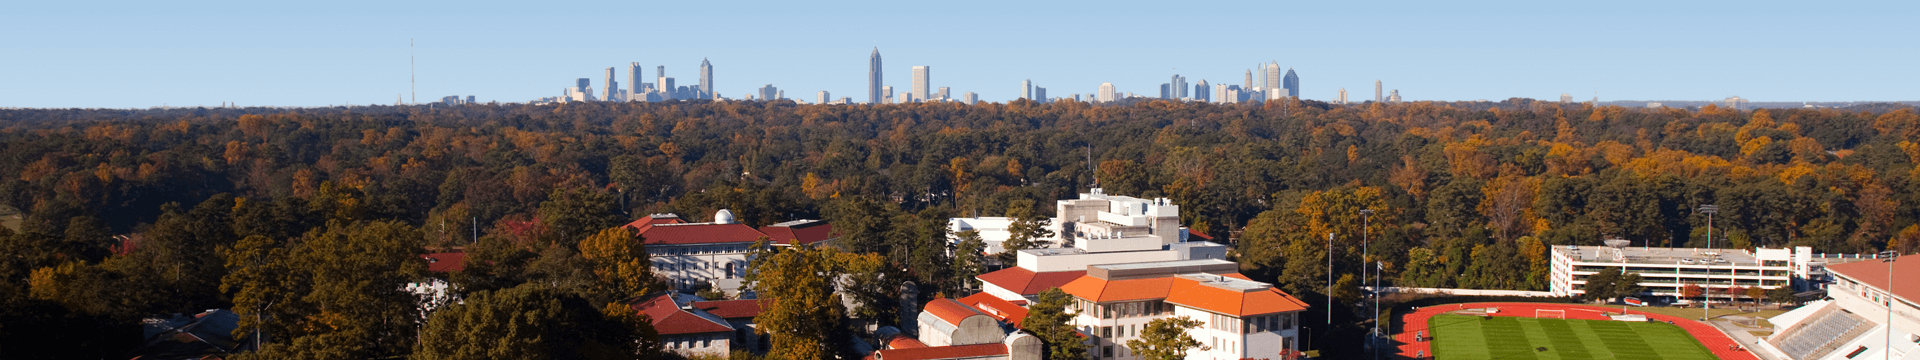 Birds-eye view of the Atlanta Campus